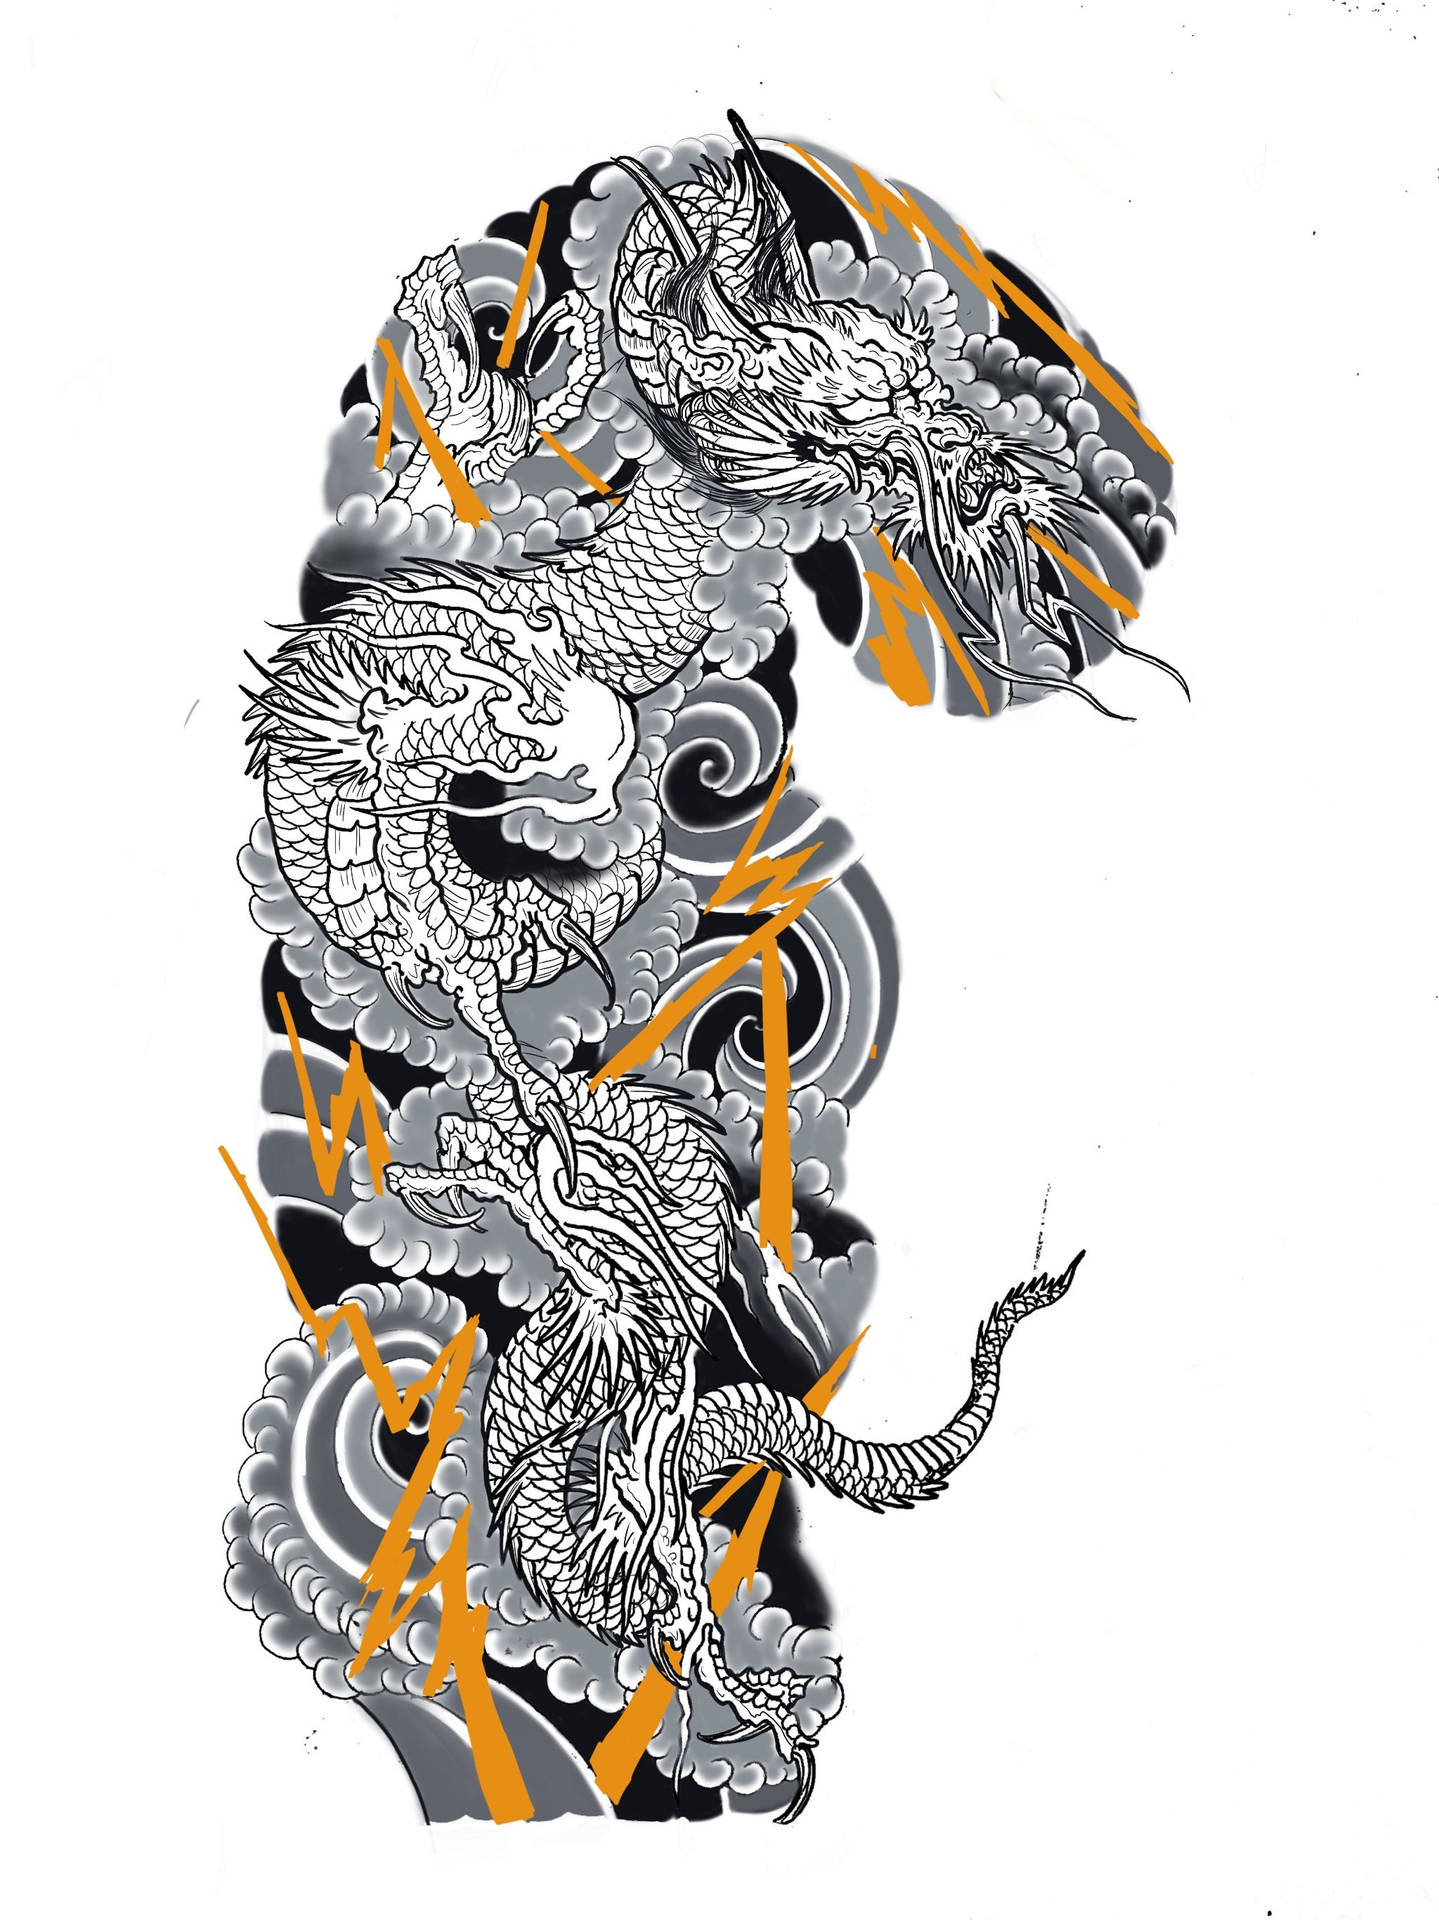 dragon sketch tattoo